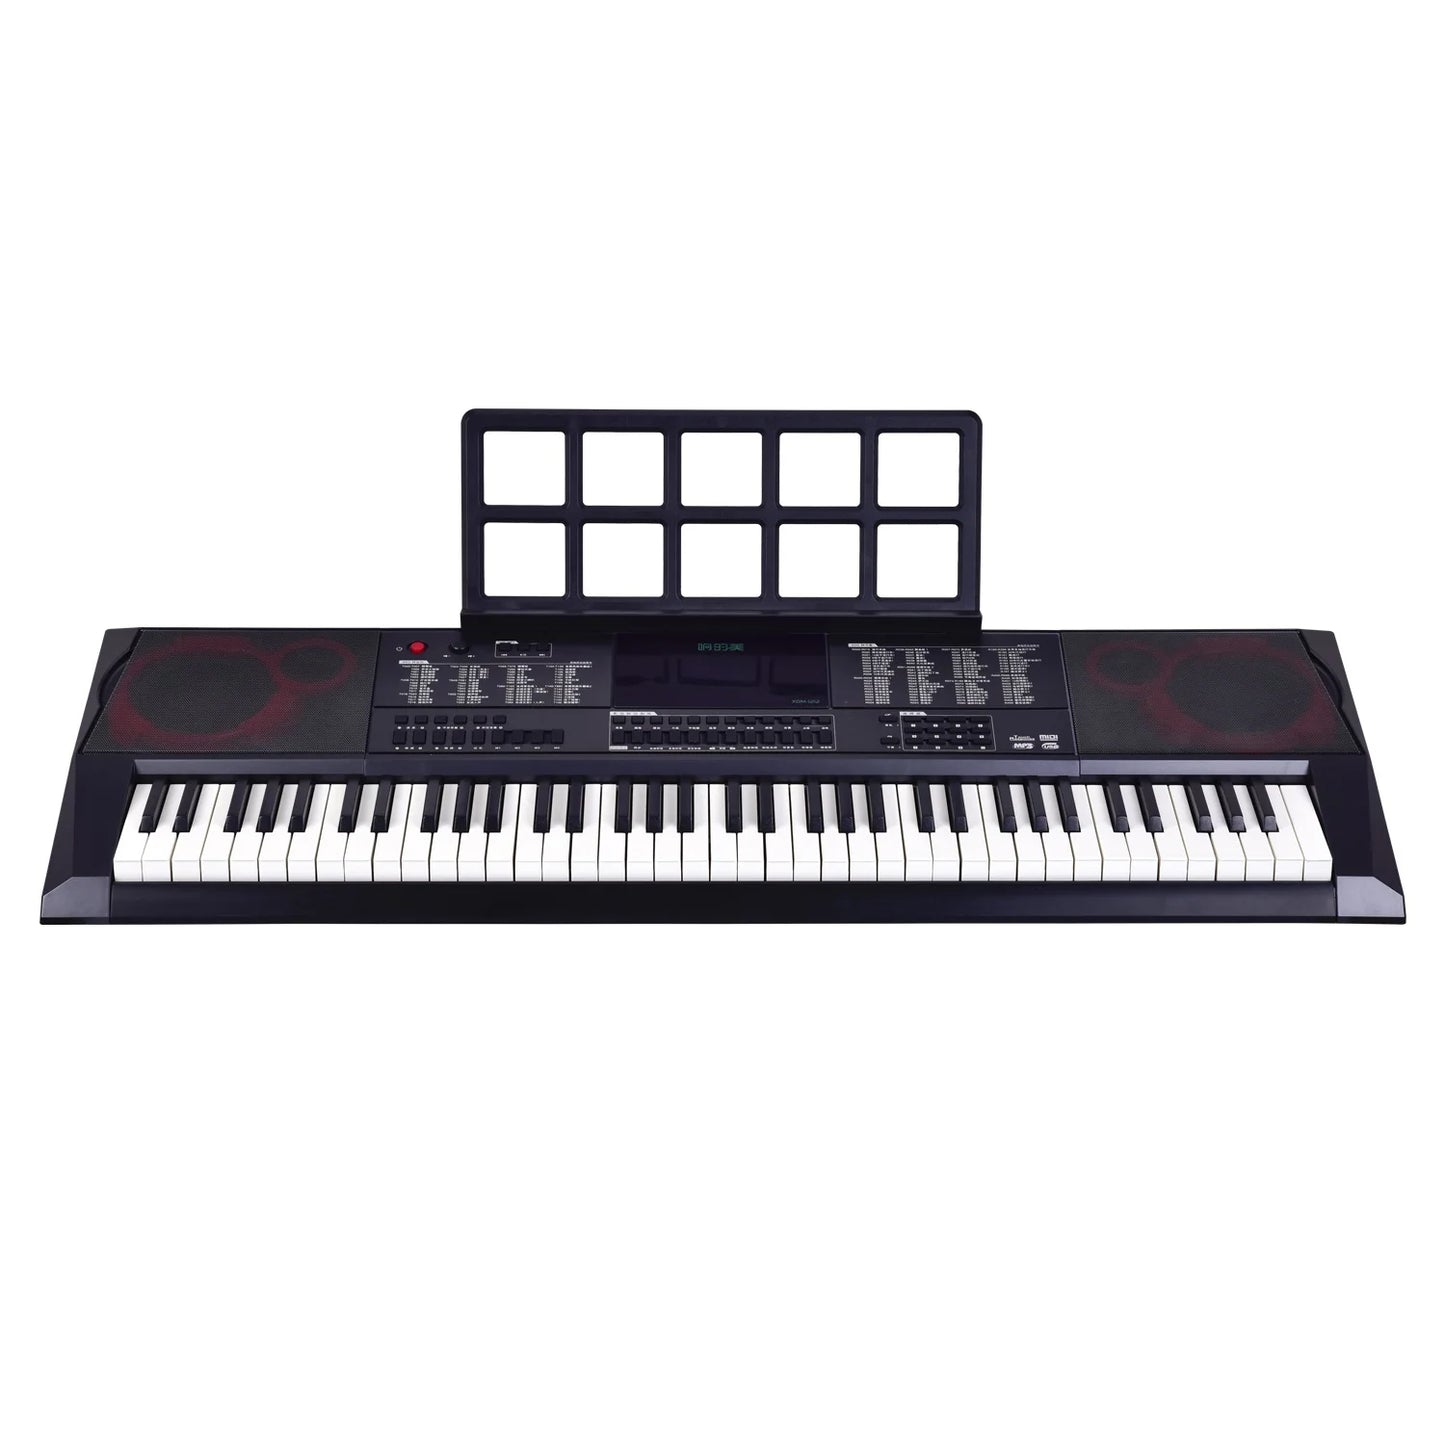 BF-1212 73 Keys Keyboard Electronic Organ  Digital Piano Keyboards